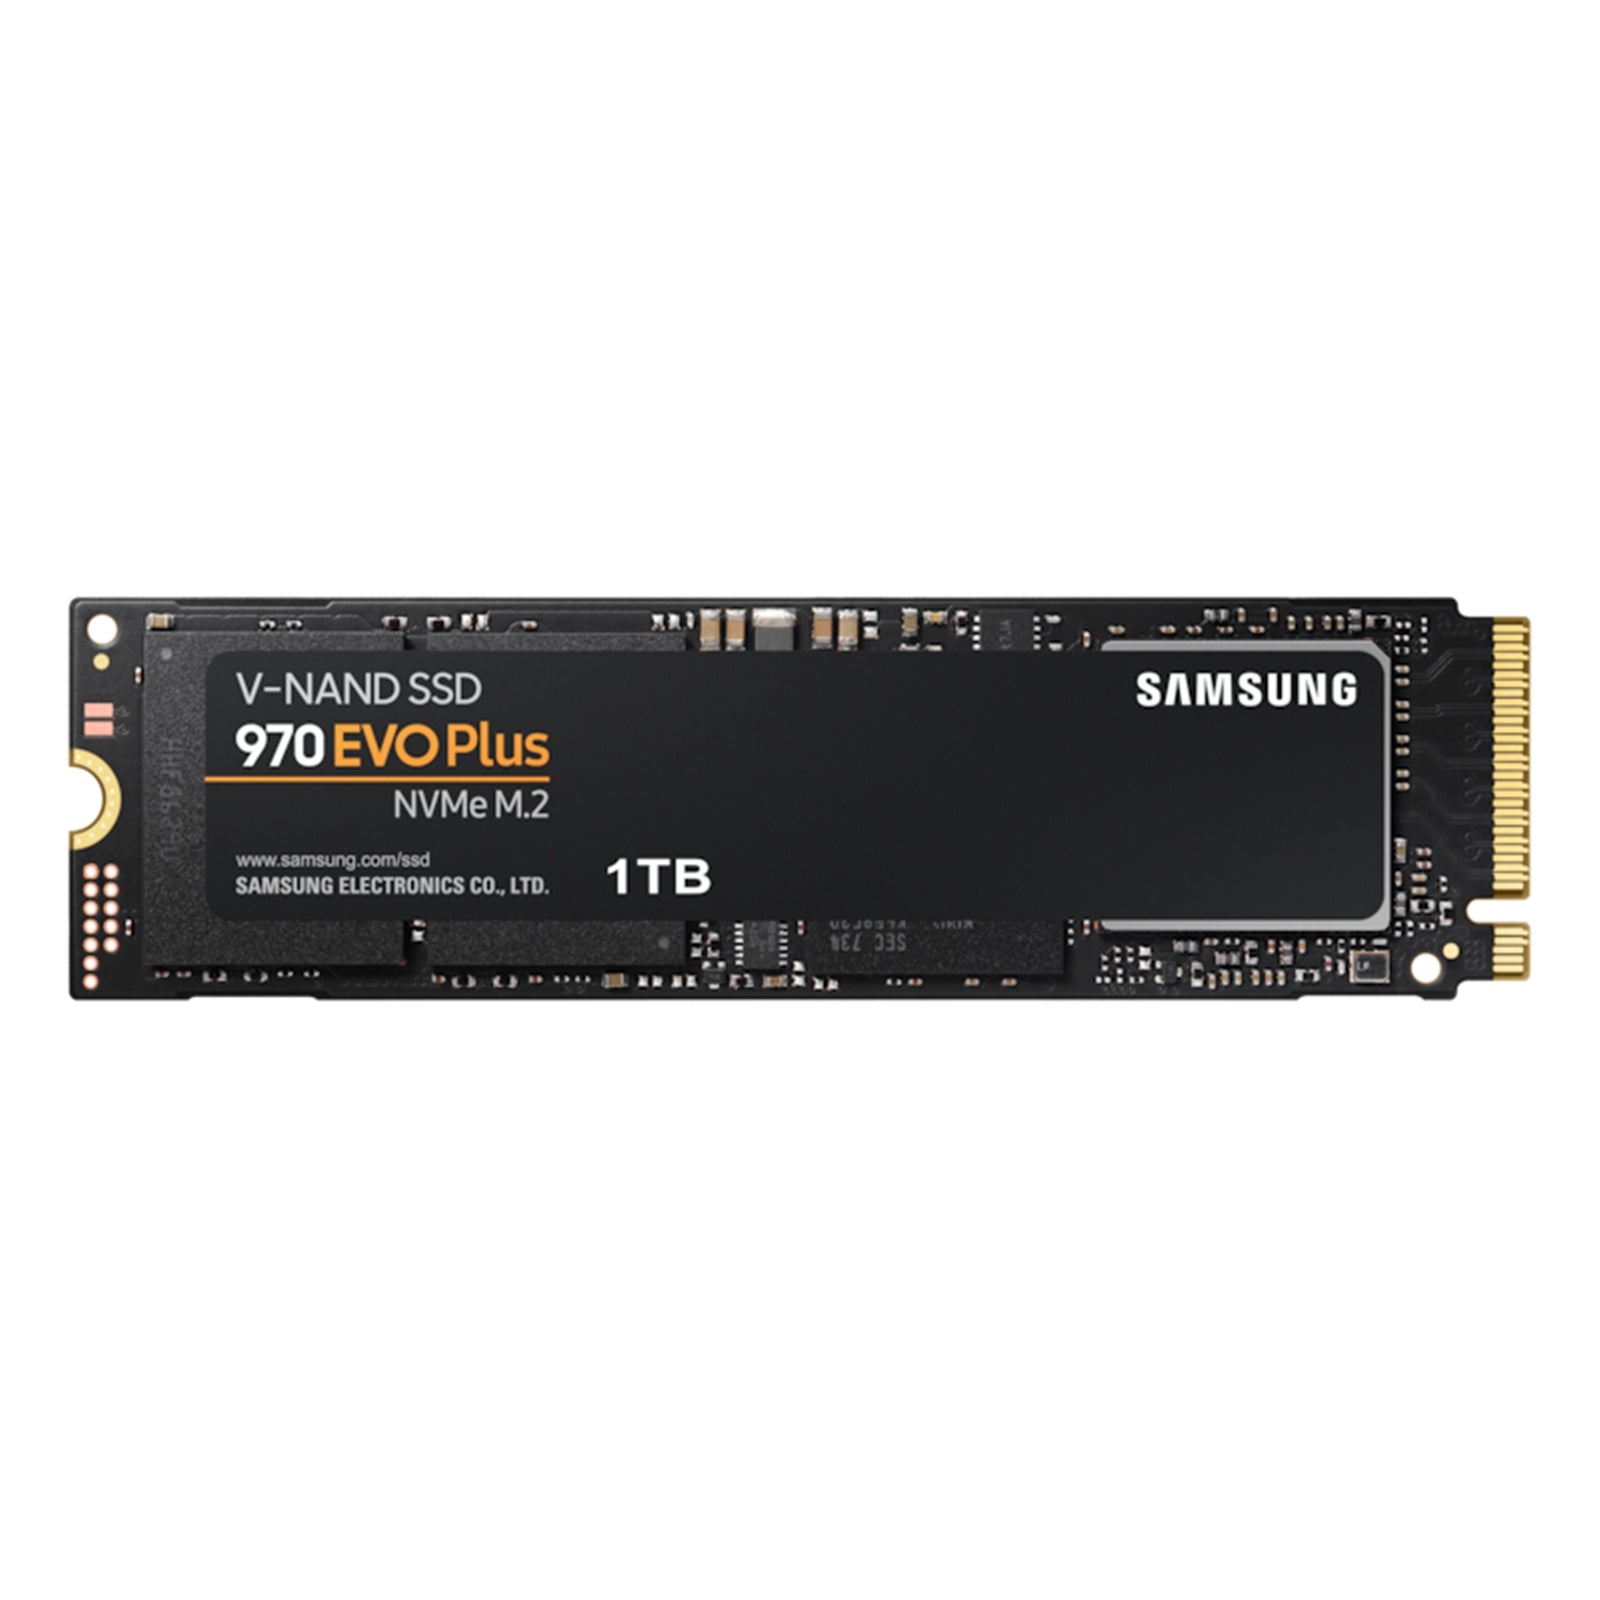 Samsung 970 EVO PLUS 1TB NVMe SSD - High-Speed M.2 PCIe Interface